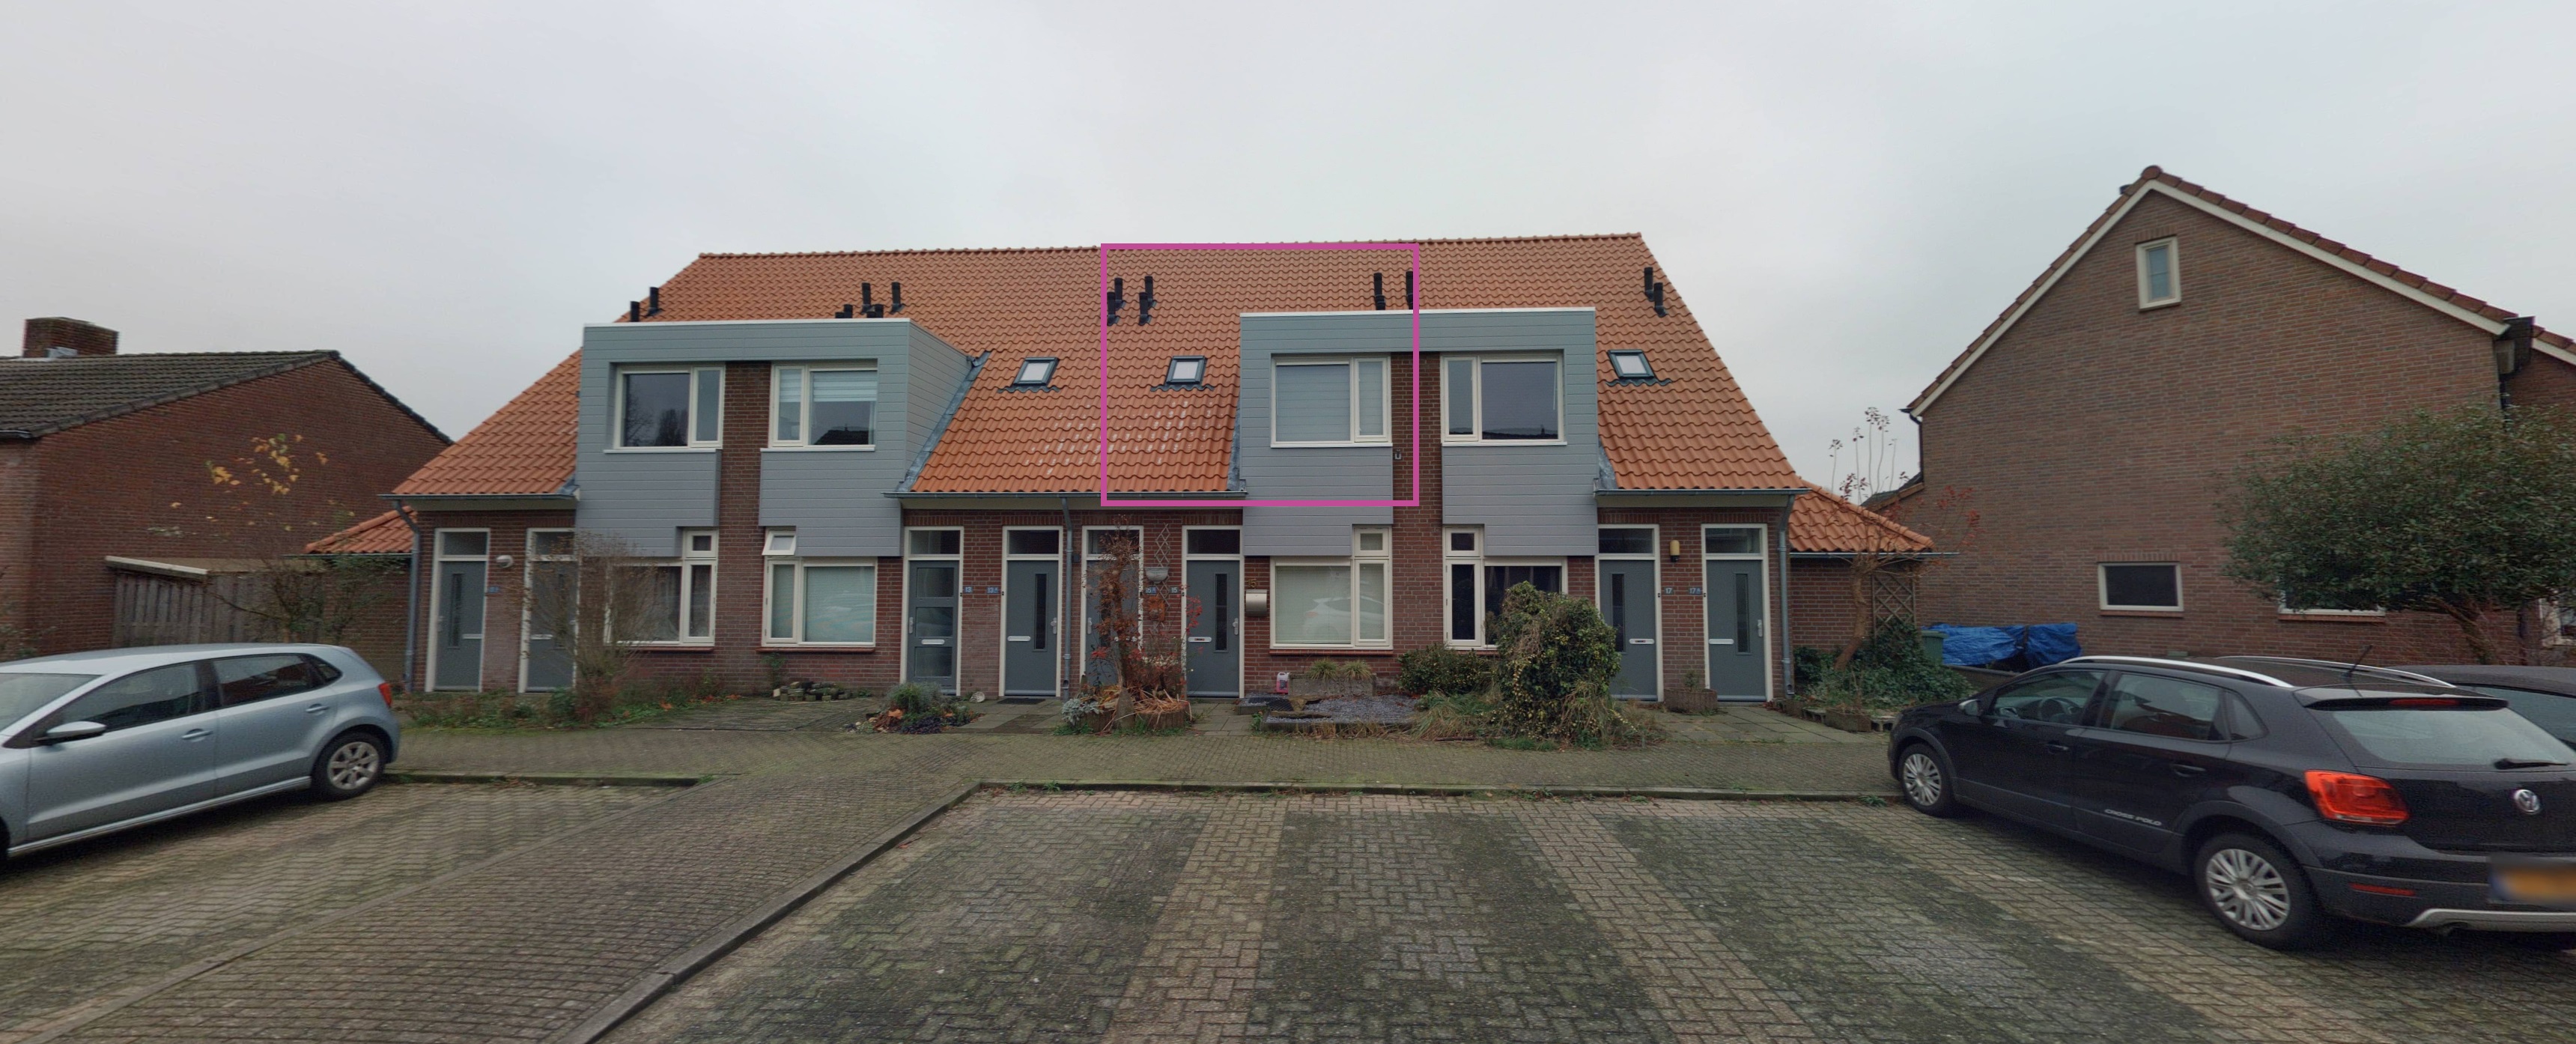 Harrie van Den Bergstraat 15A, 5845 HG Sint Anthonis, Nederland